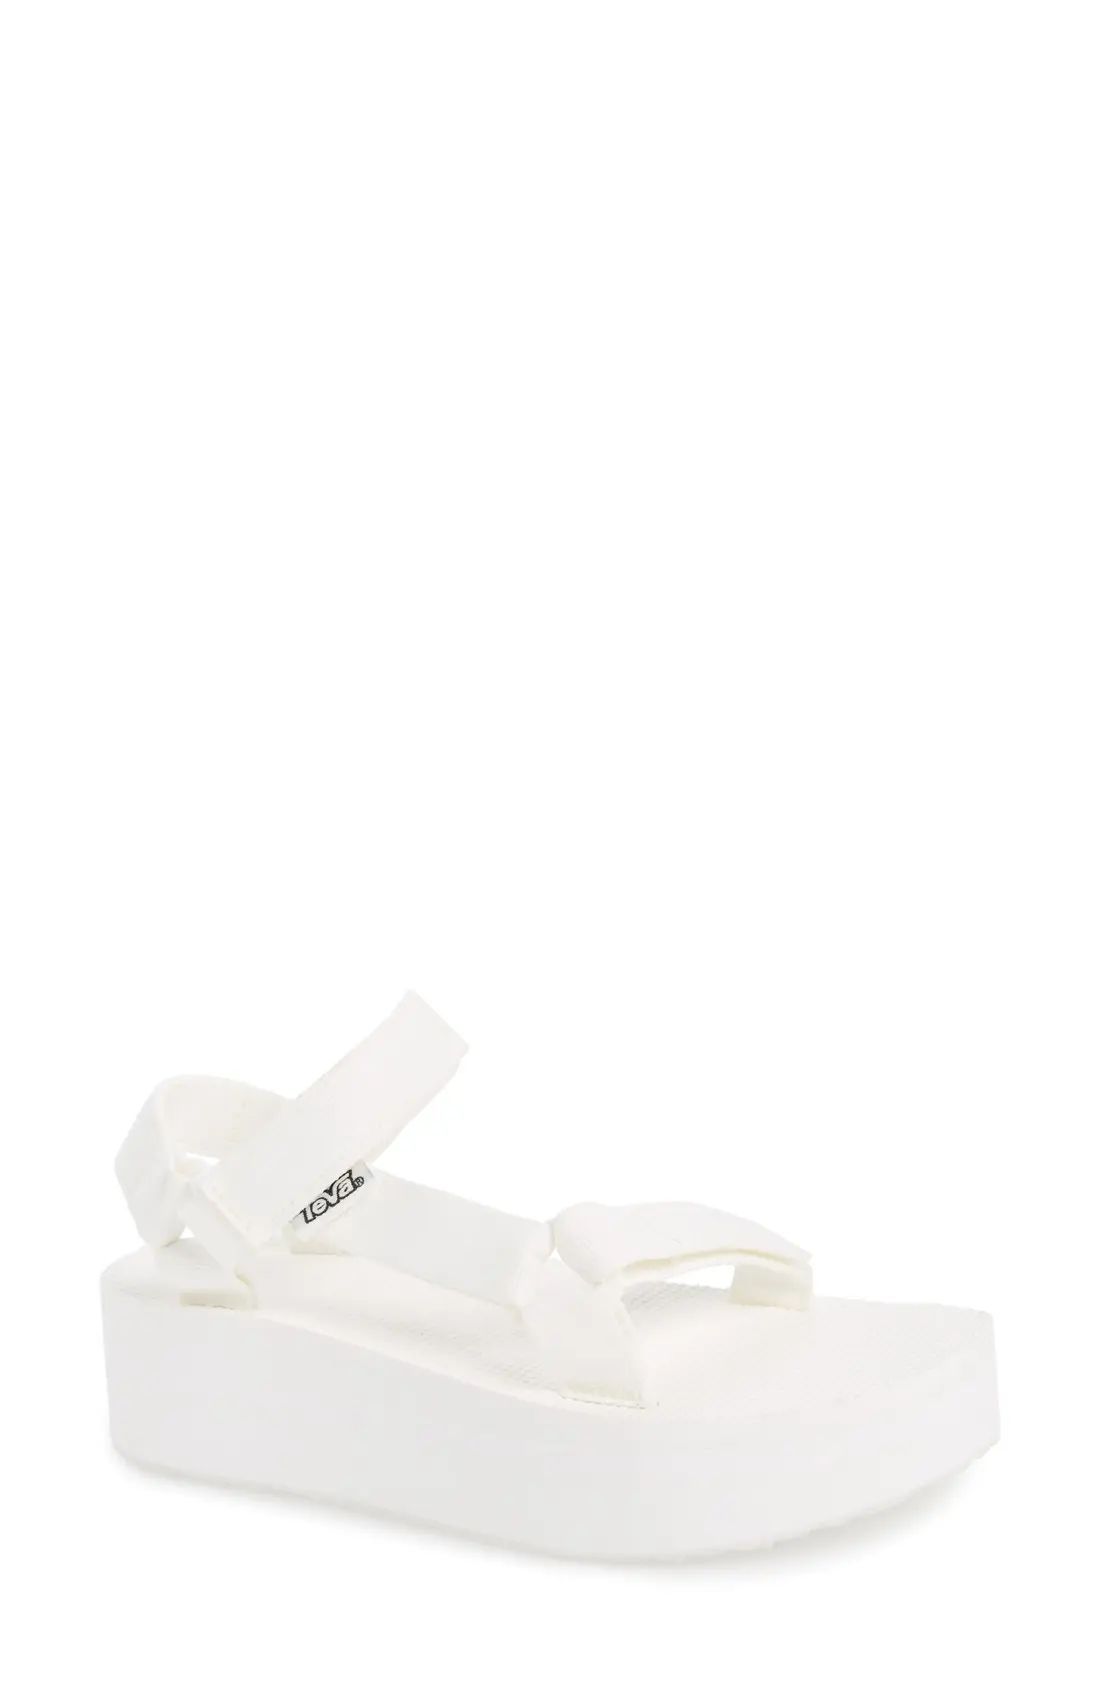 Teva 'Universal' Flatform Sandal in Bright White at Nordstrom, Size 9 | Nordstrom